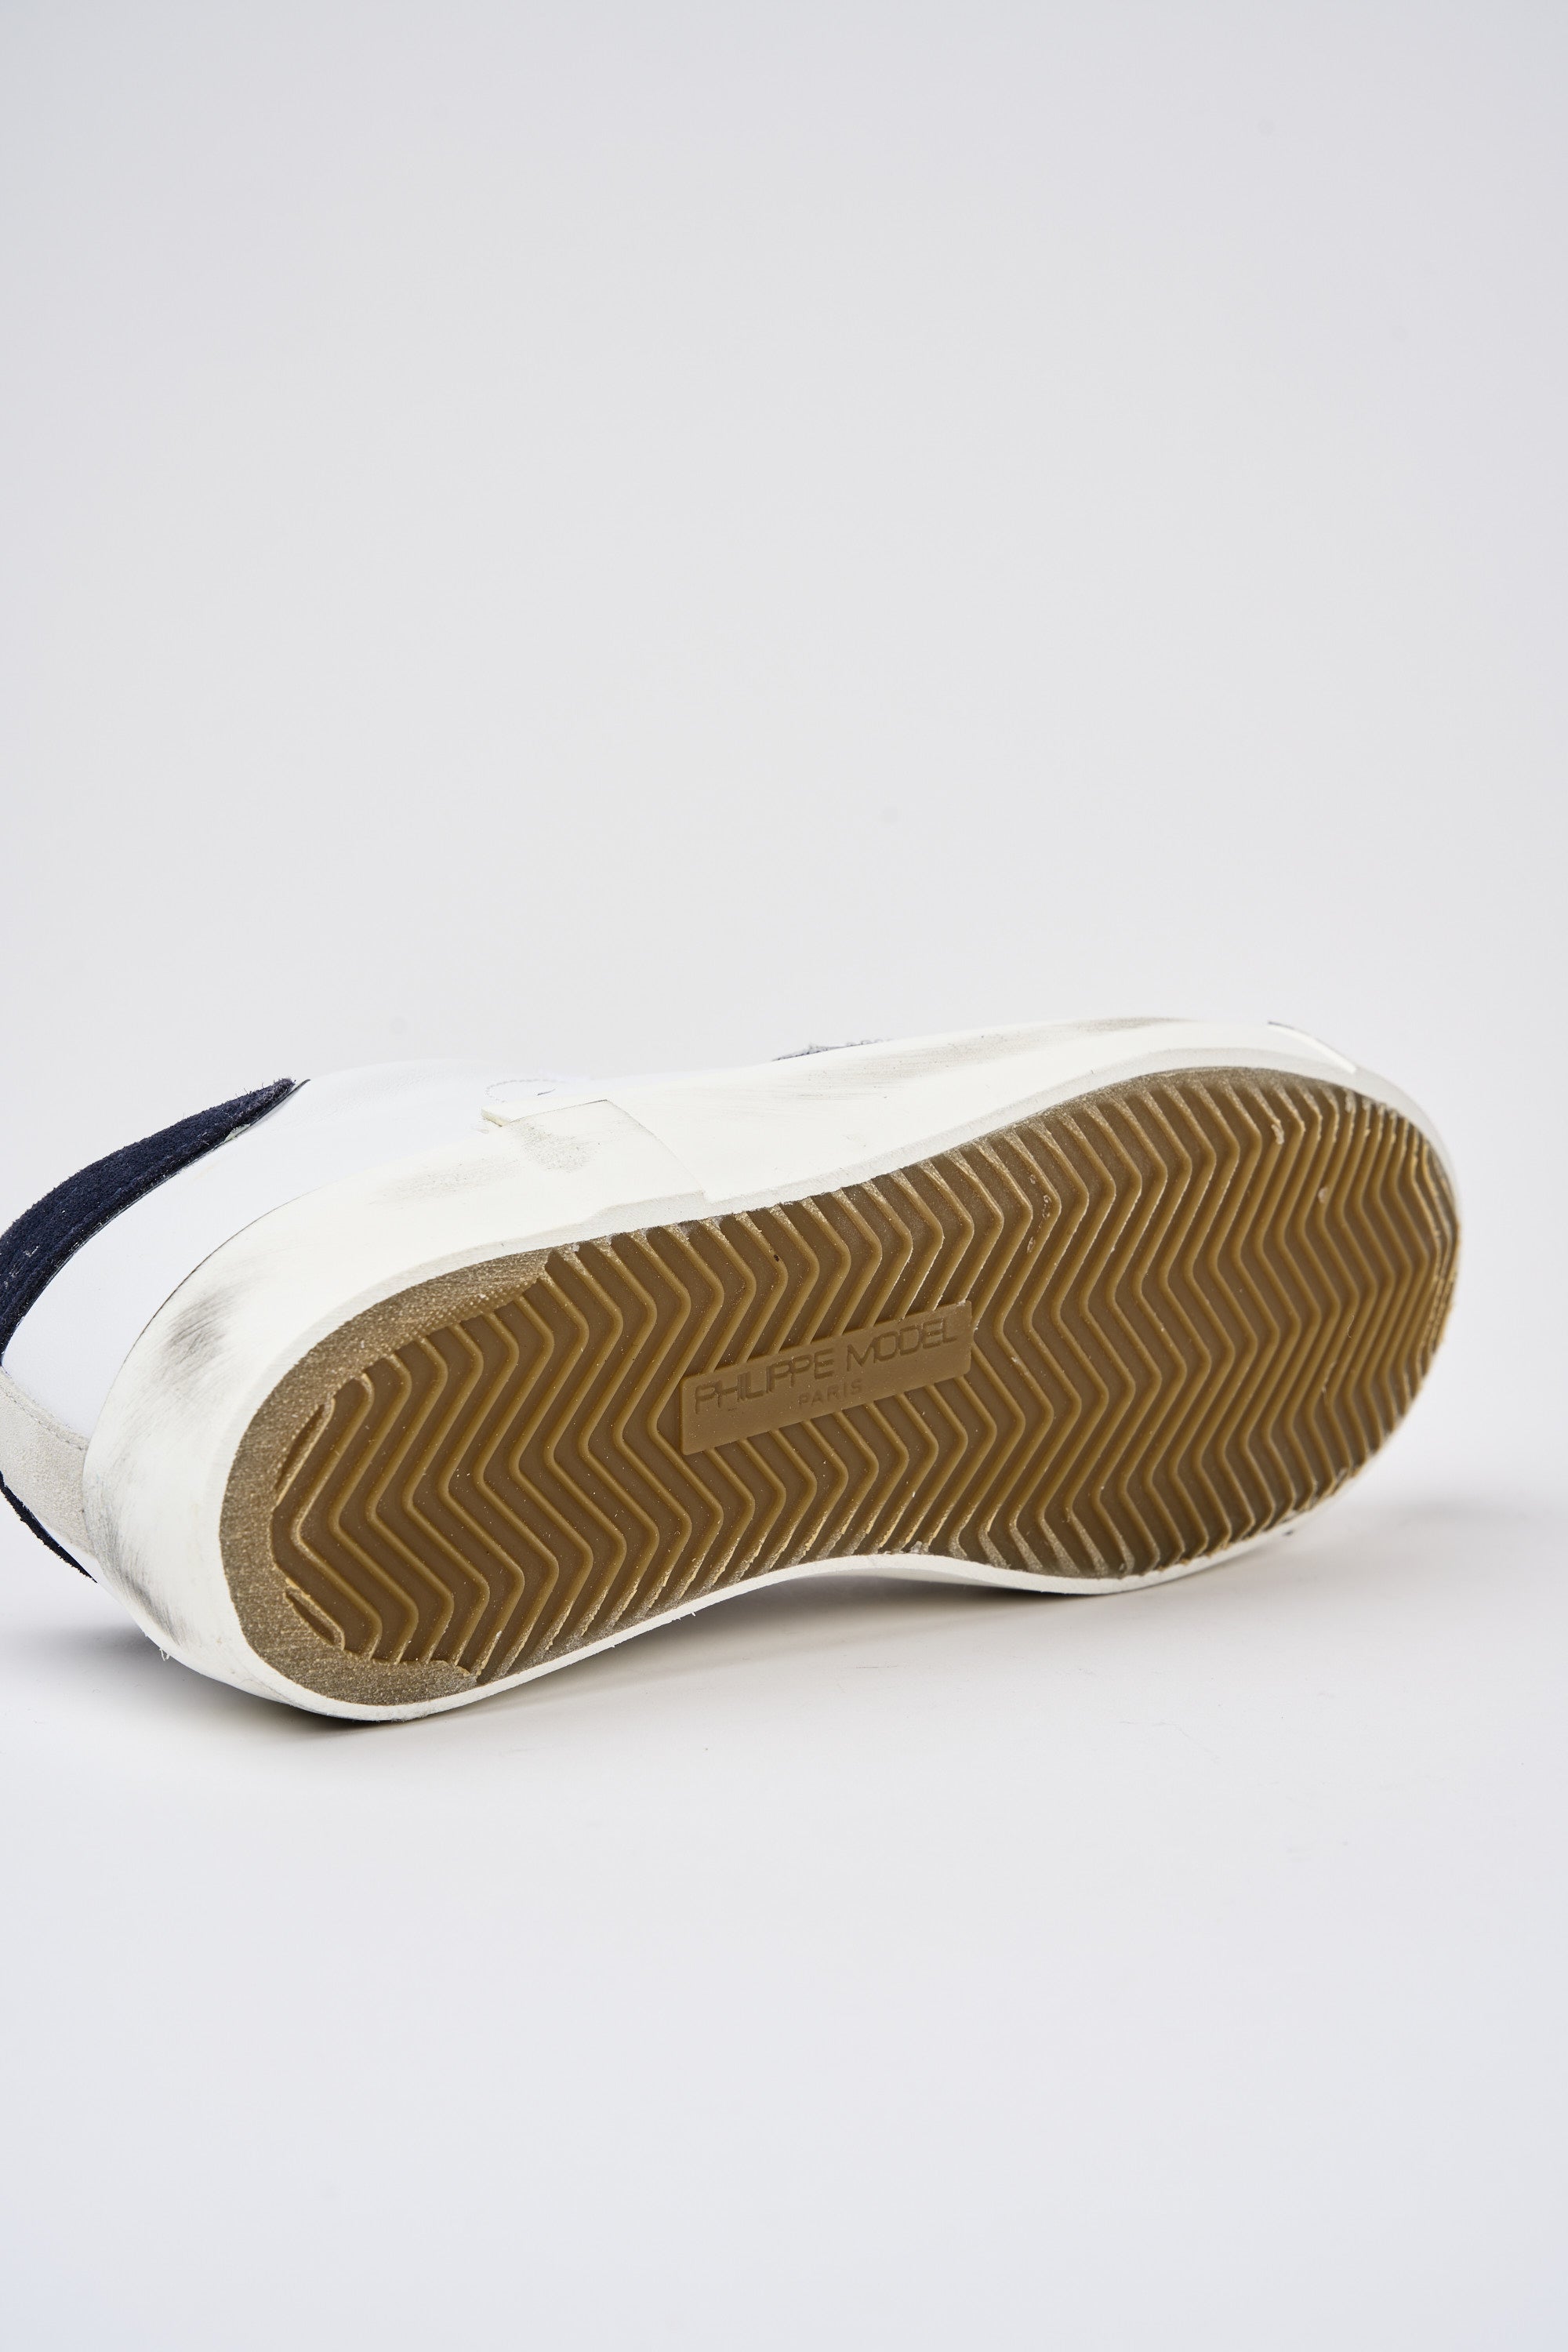 Philippe Model Sneaker PRSX Leder/Suede Weiß/Blau-6